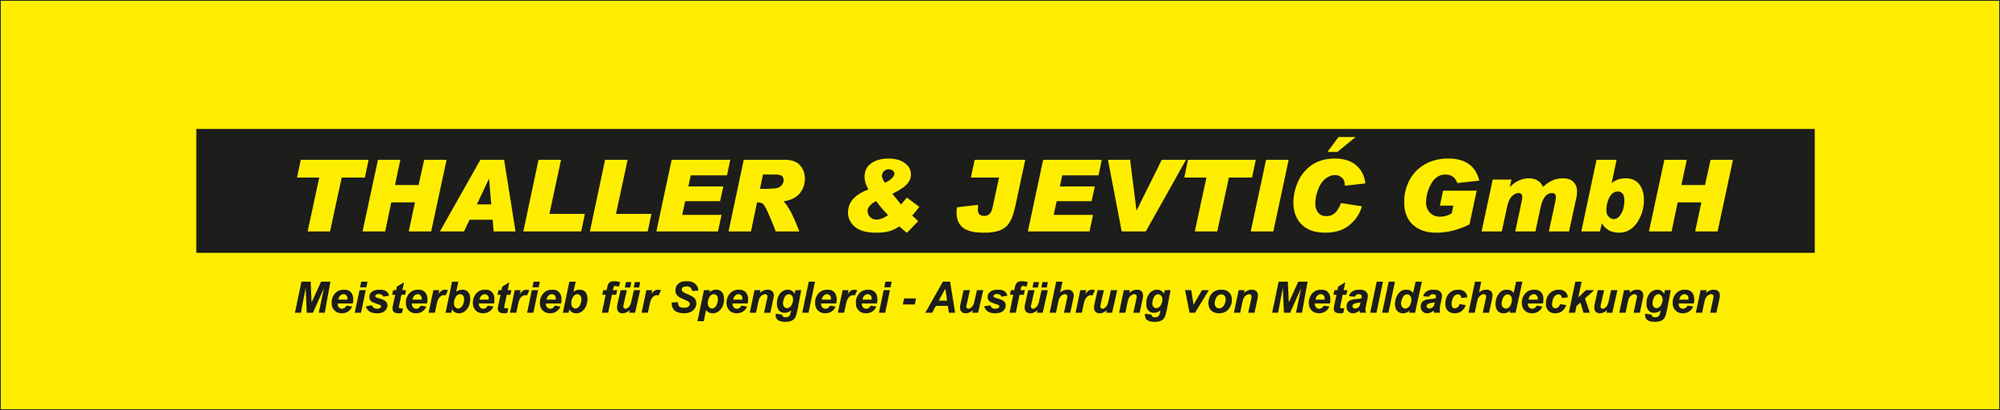 Logo der Firma Thaller & Jevtic GmbH